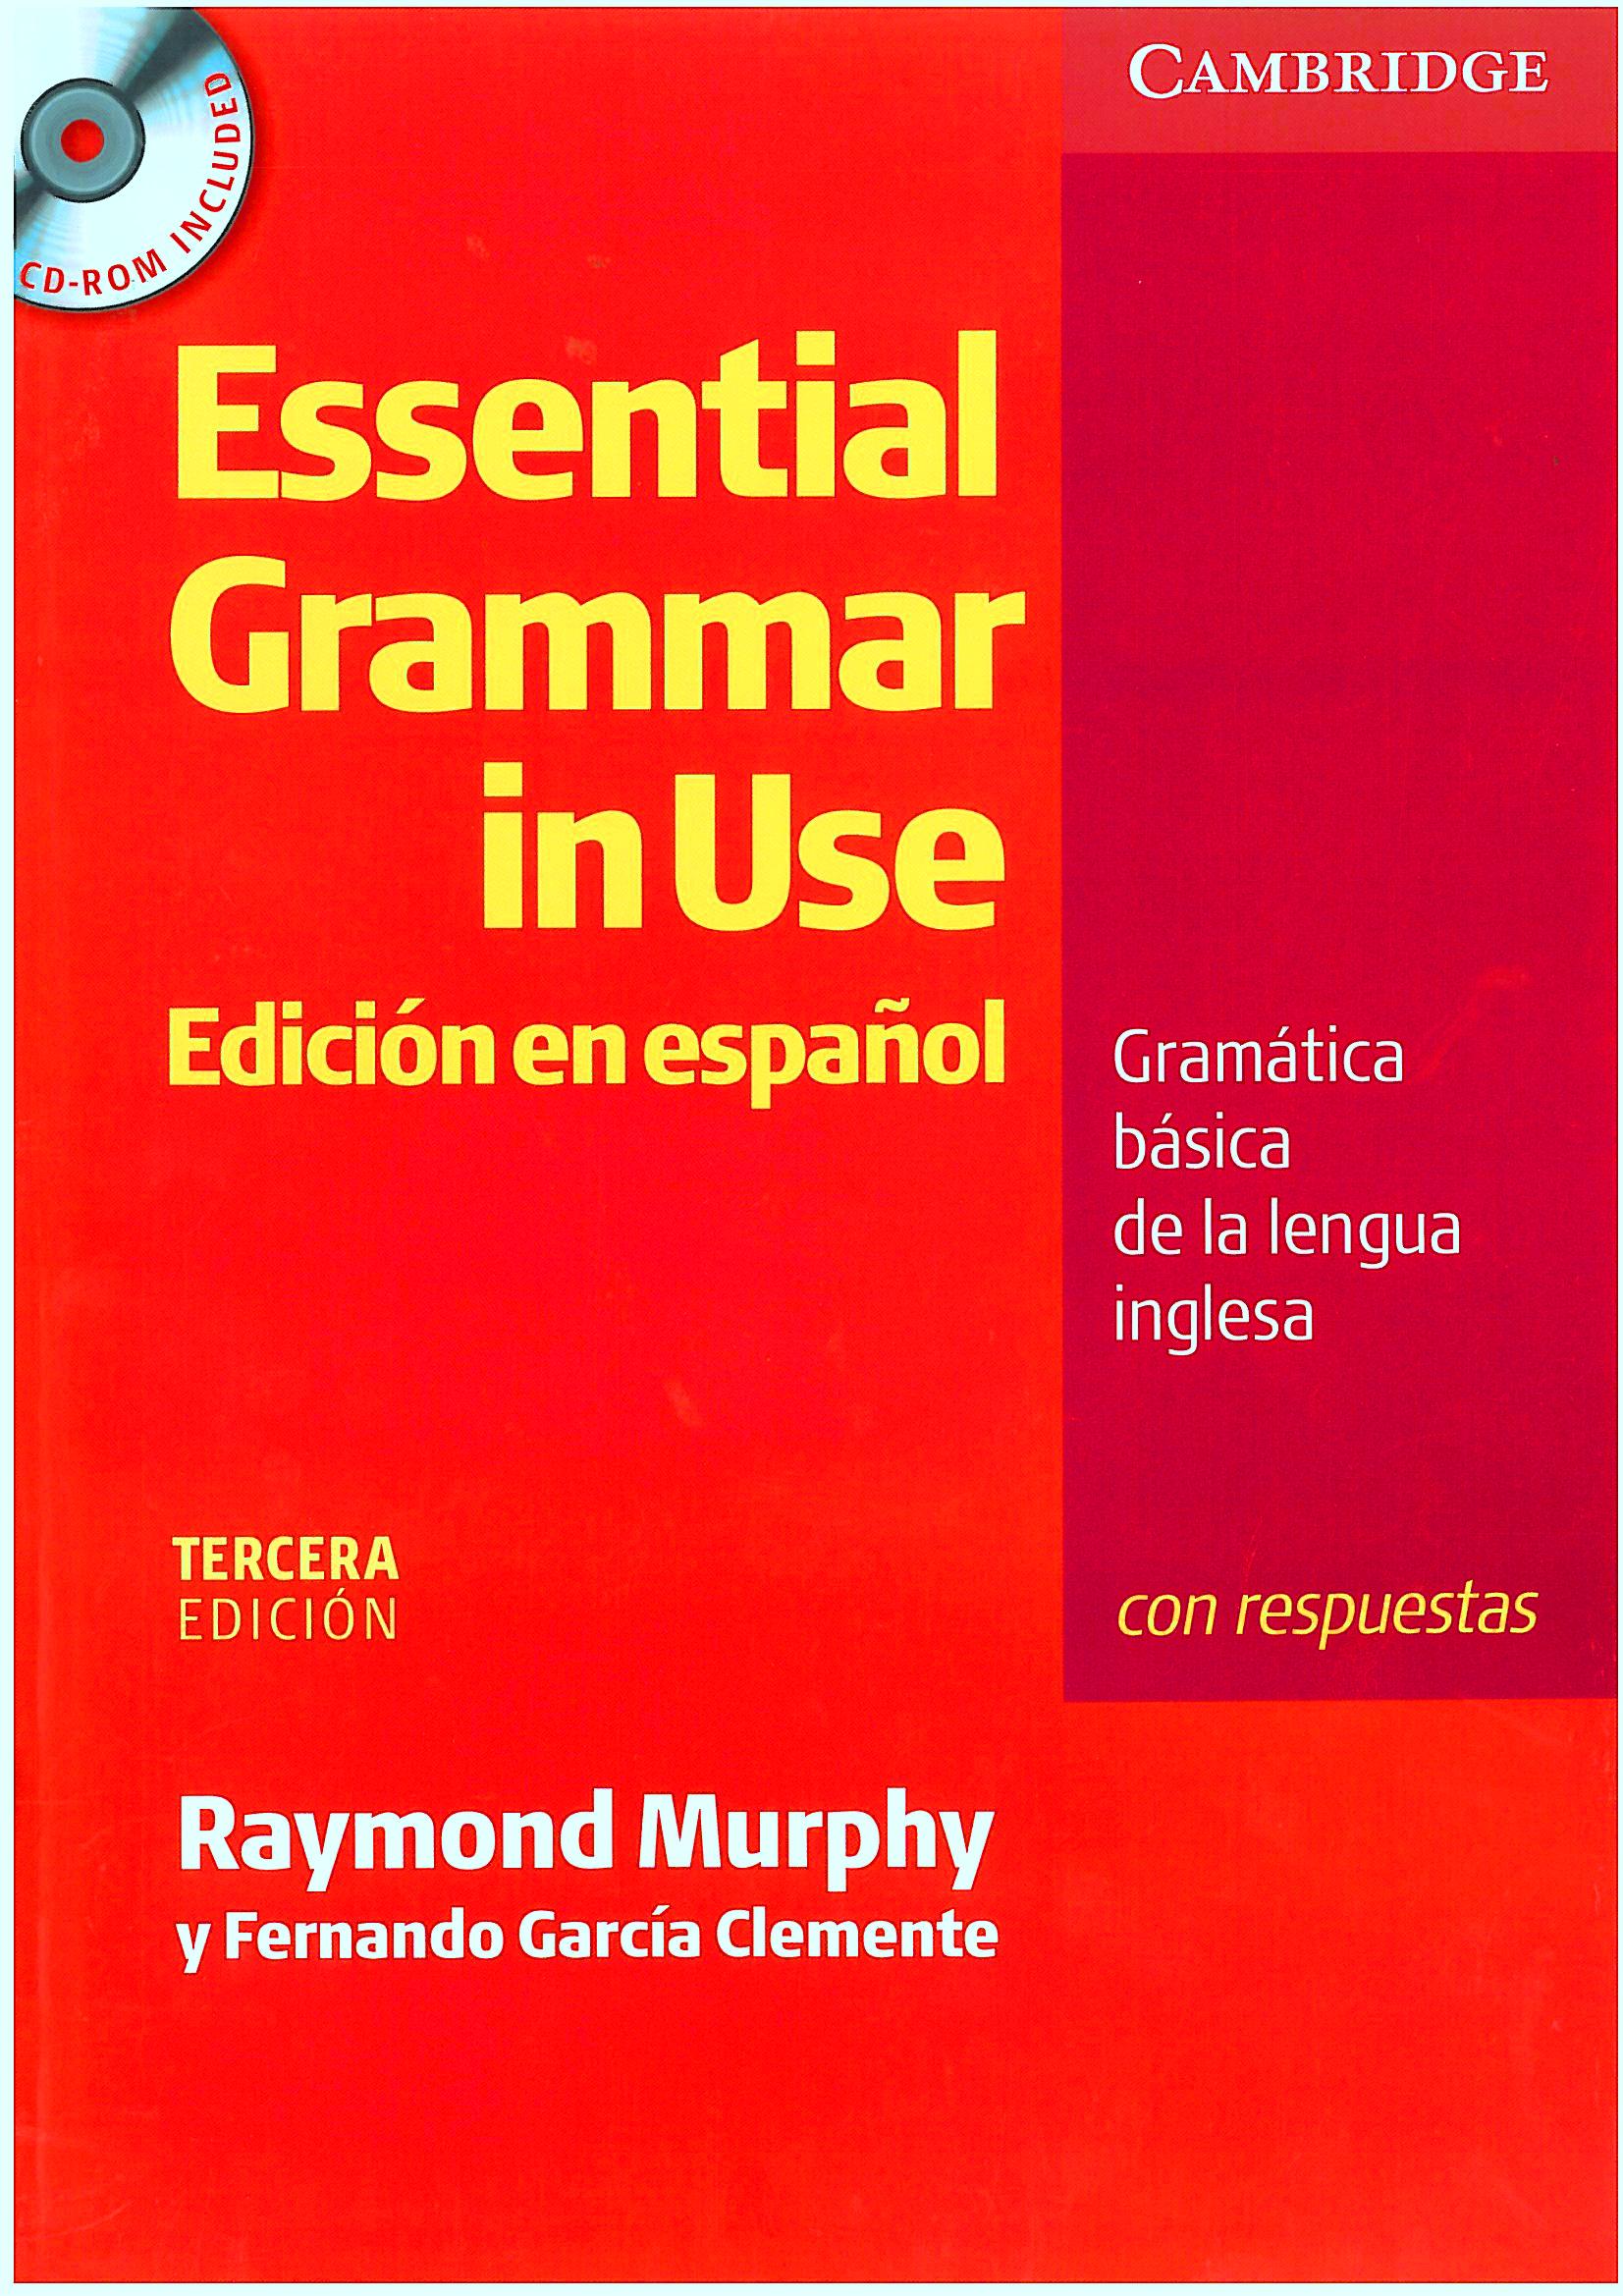 essential grammar in use pdf download gratis